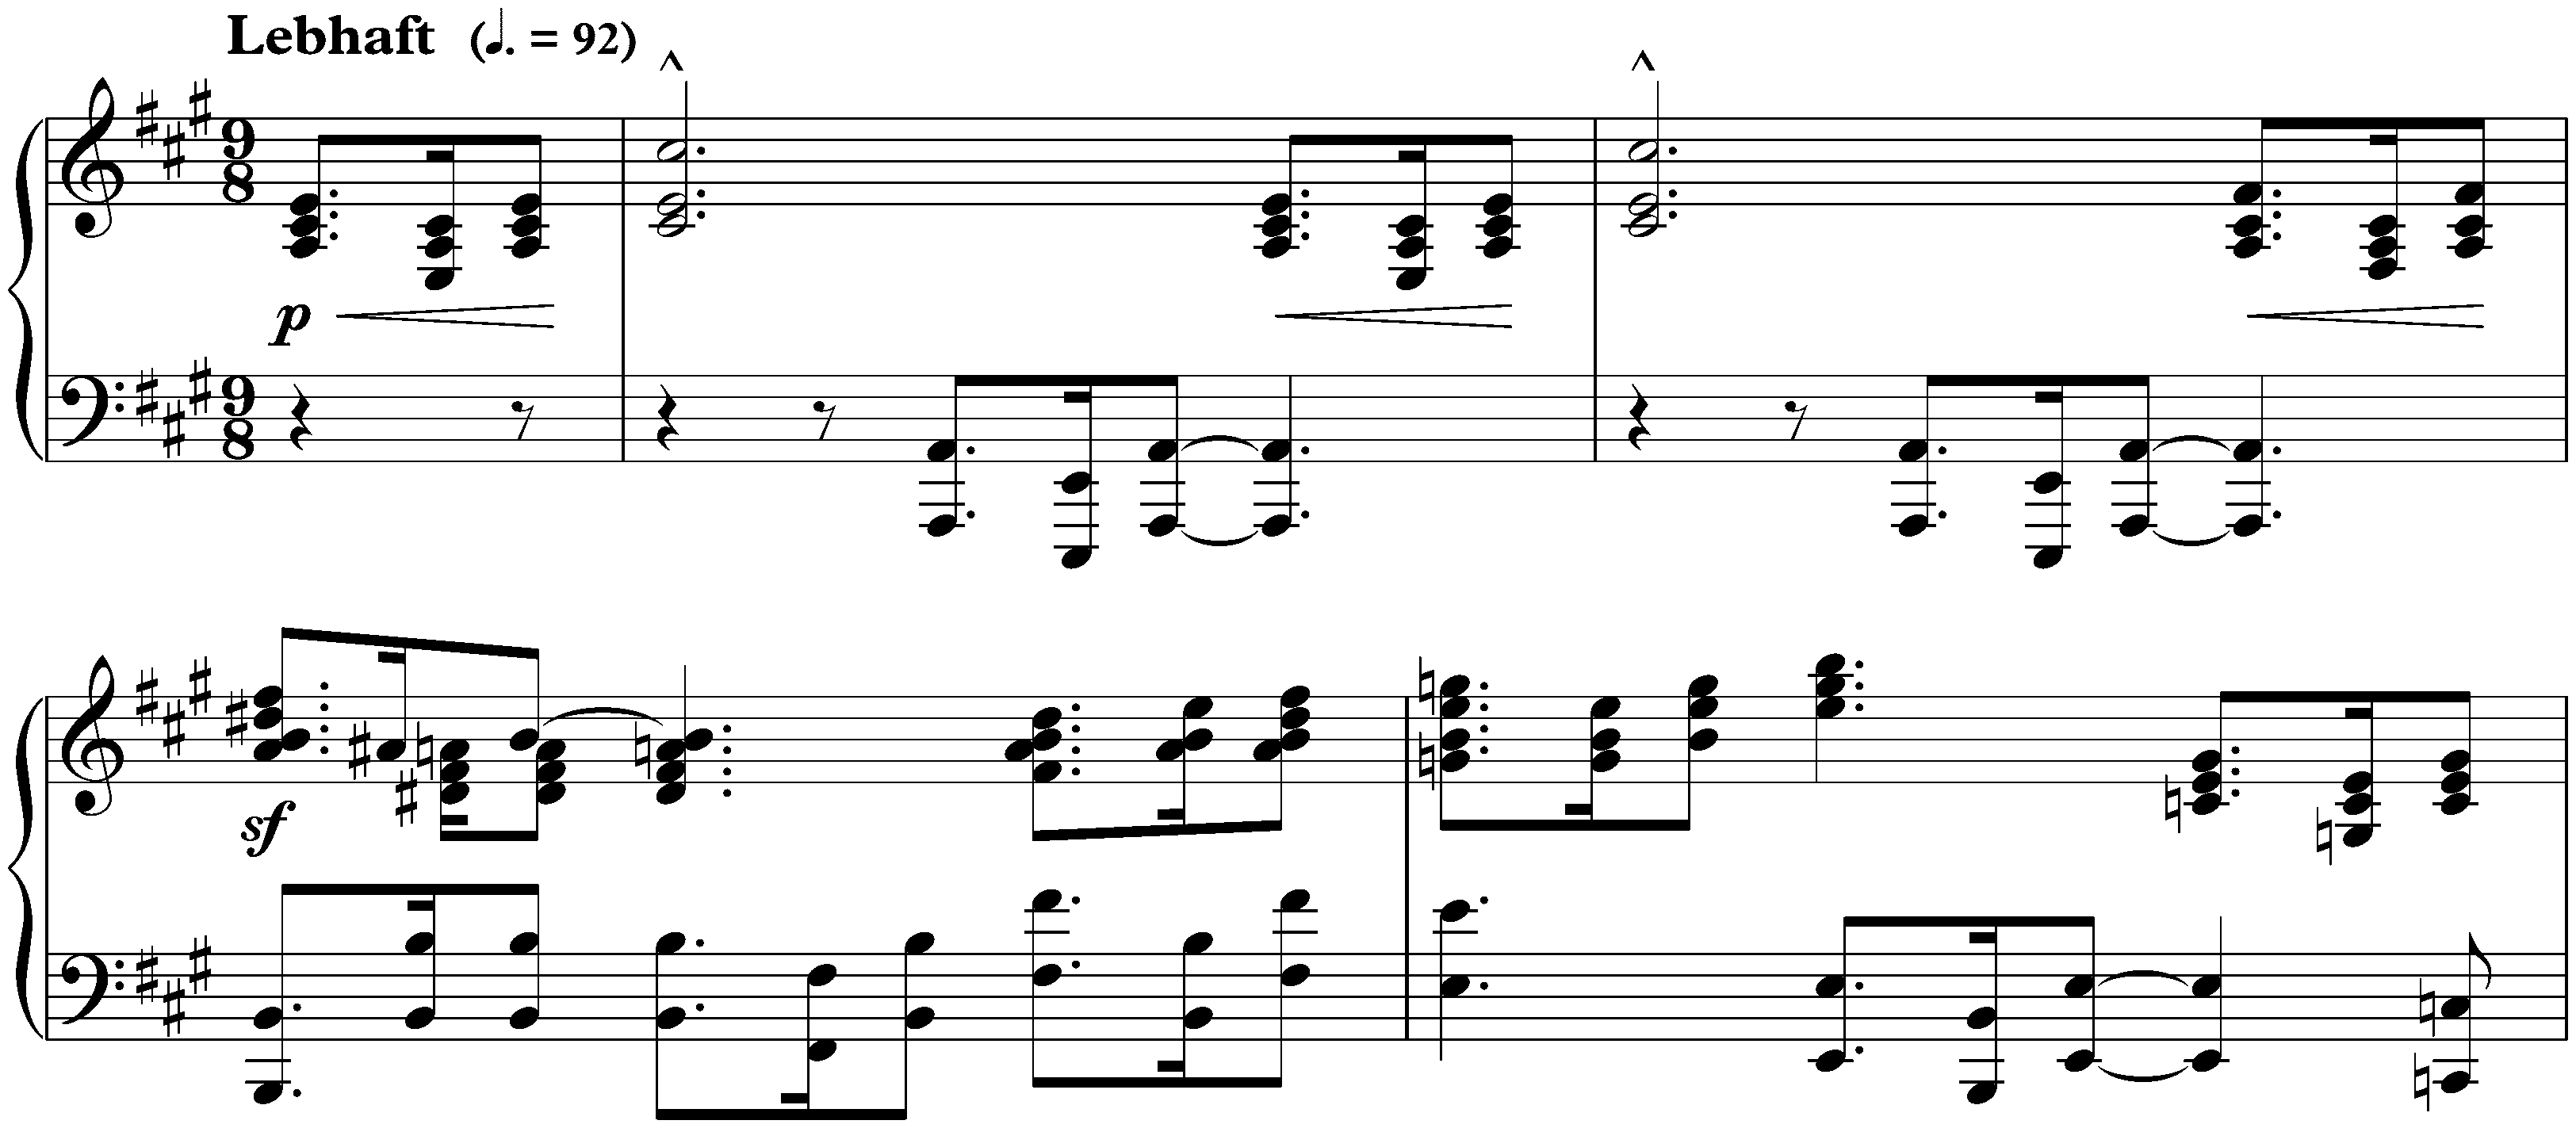 Gesänge der Frühe, op. 133; 3. Lebhaft